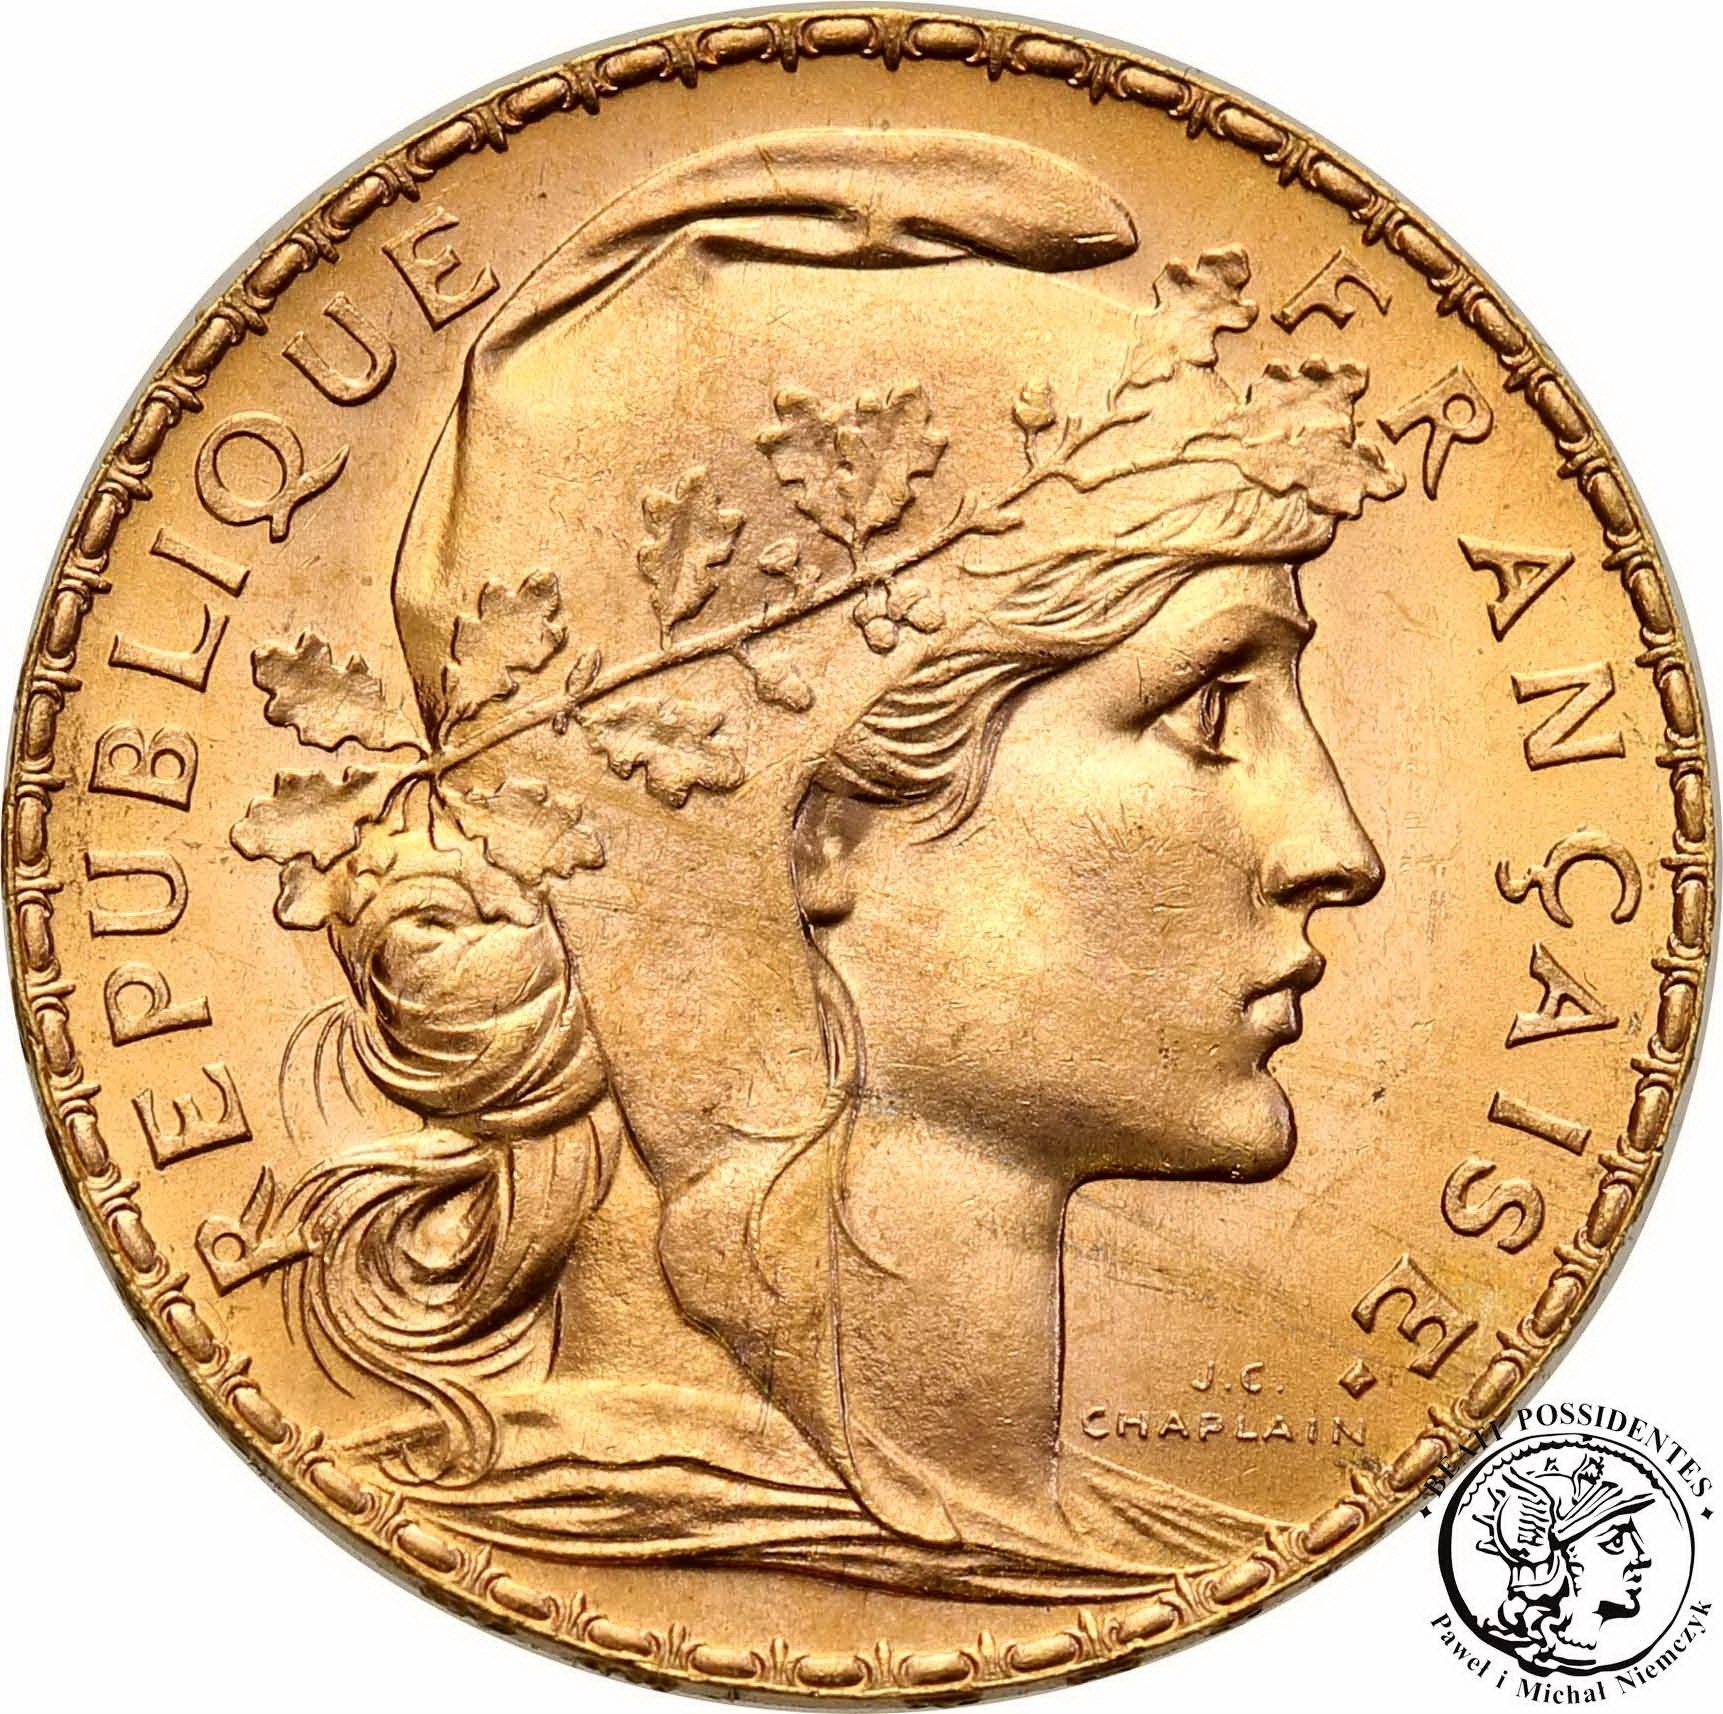 Francja 20 franków 1909 st.1